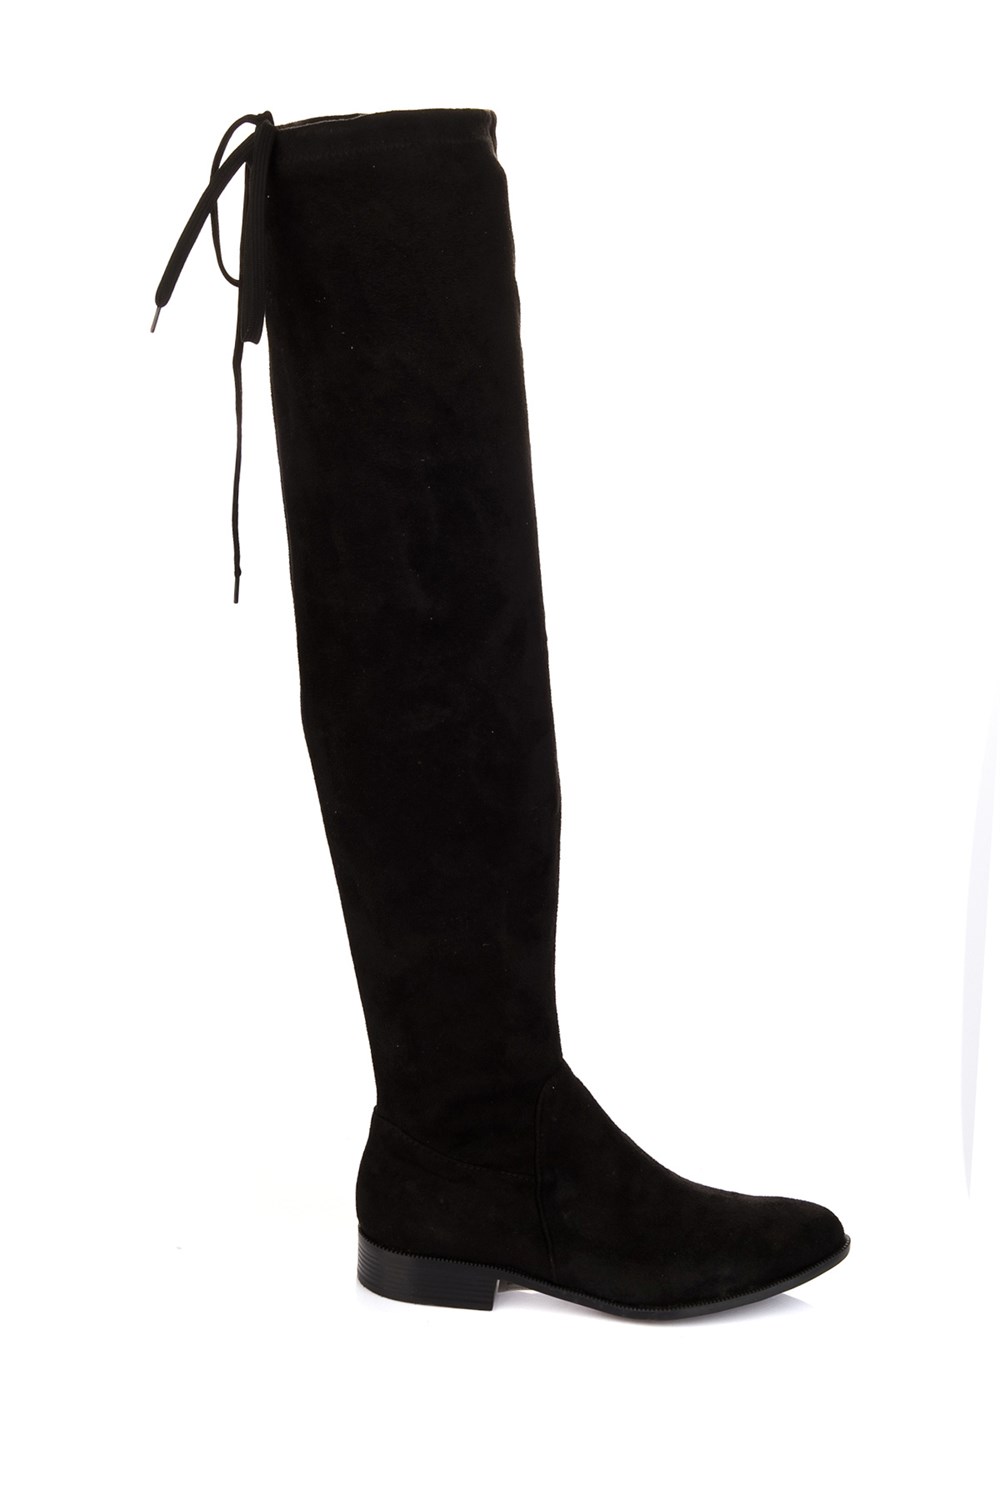 Fox Shoes Siyah Kadın Çizme C860600102